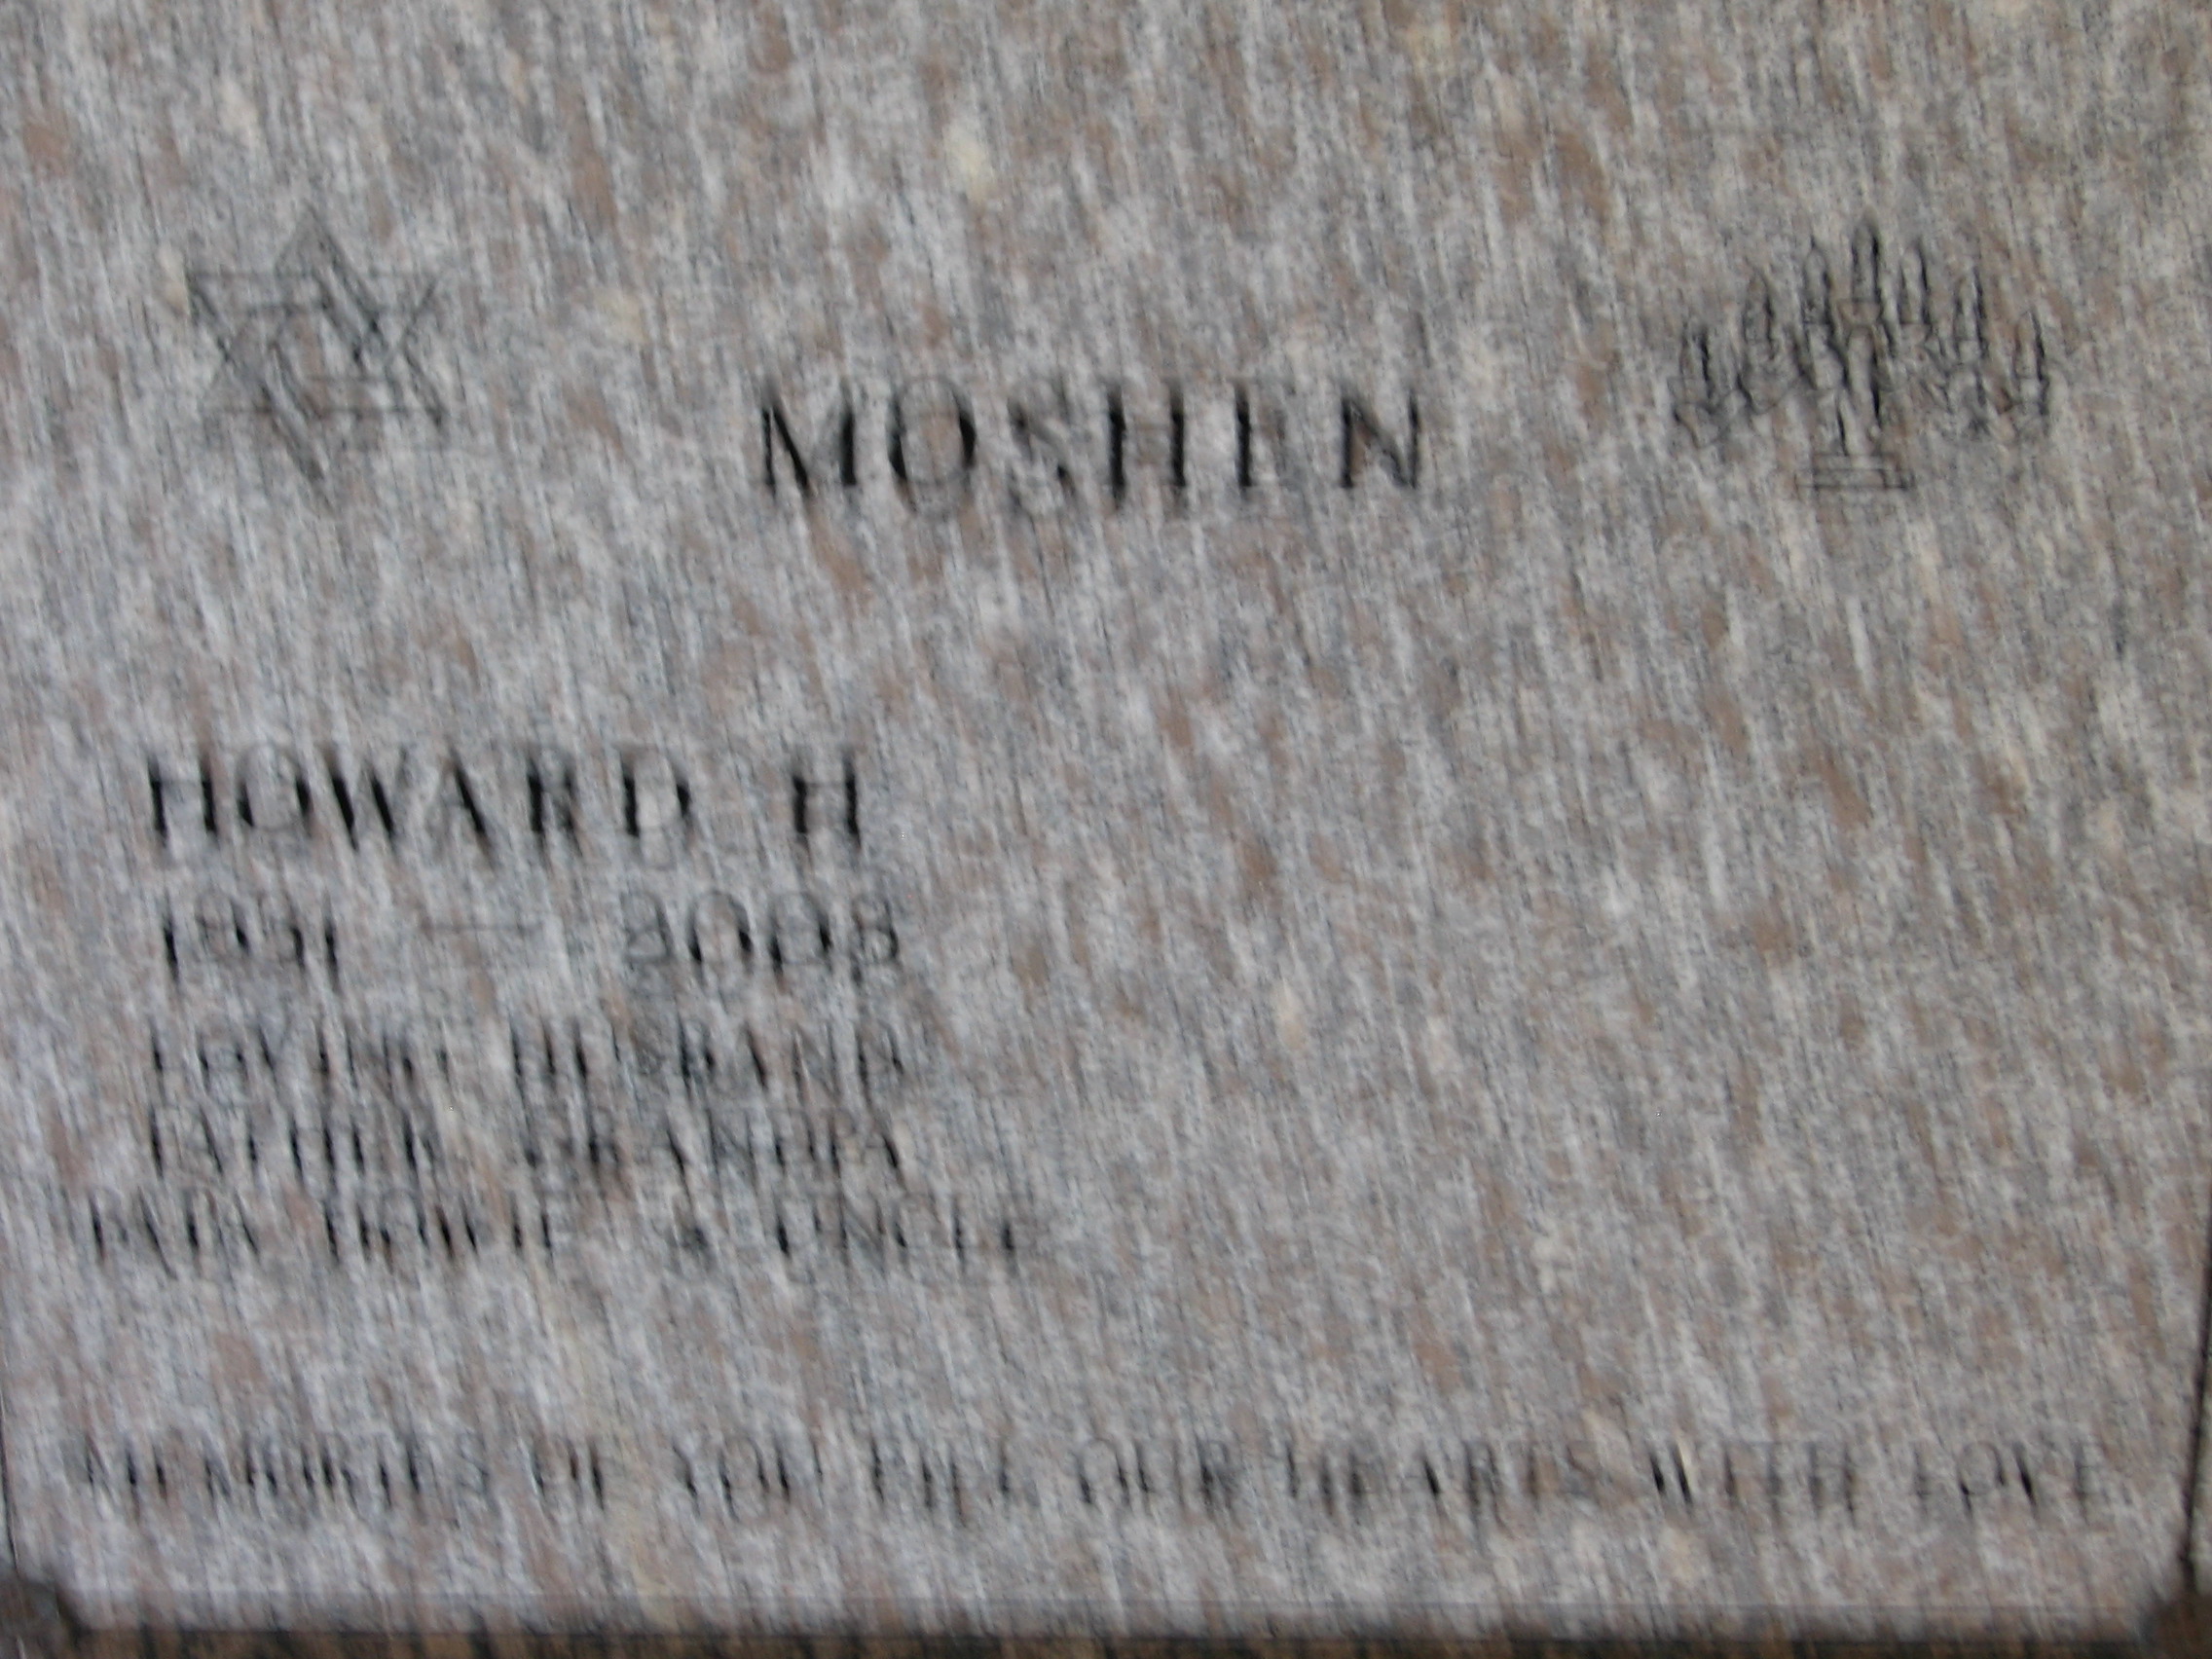 Howard H Moshen